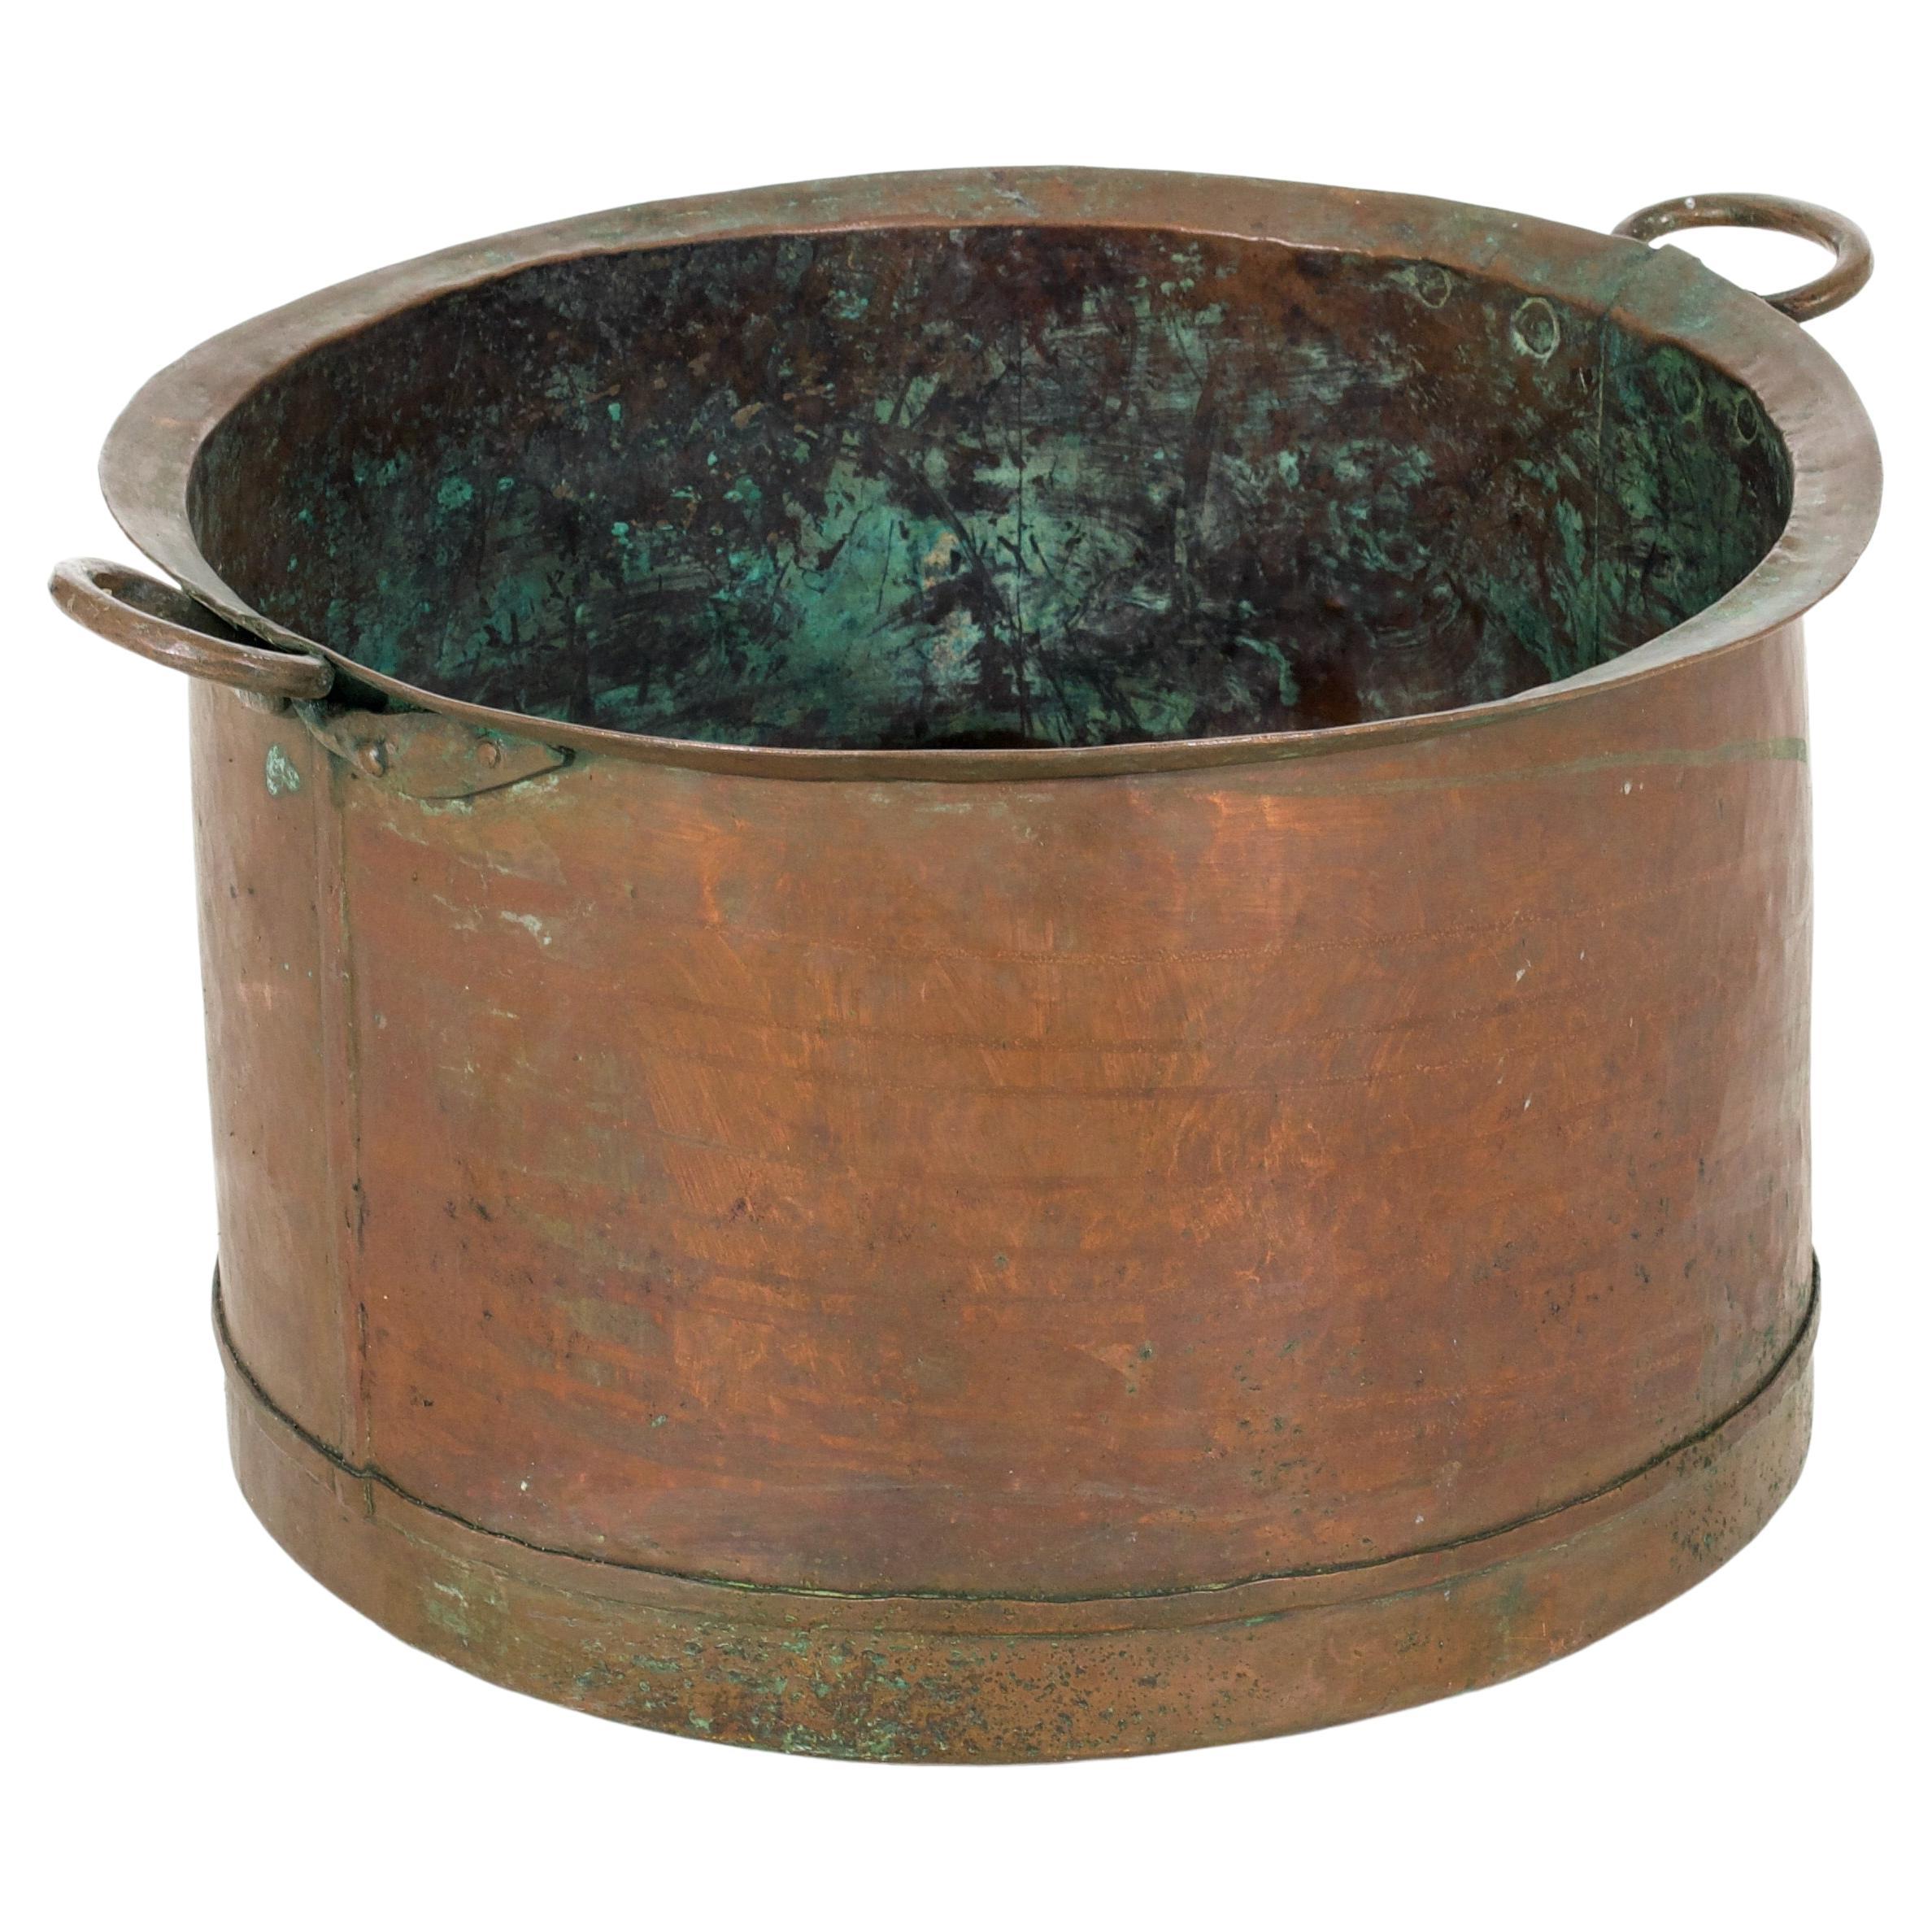 Danish Handmade Copper Bowl, circa 1750-1770